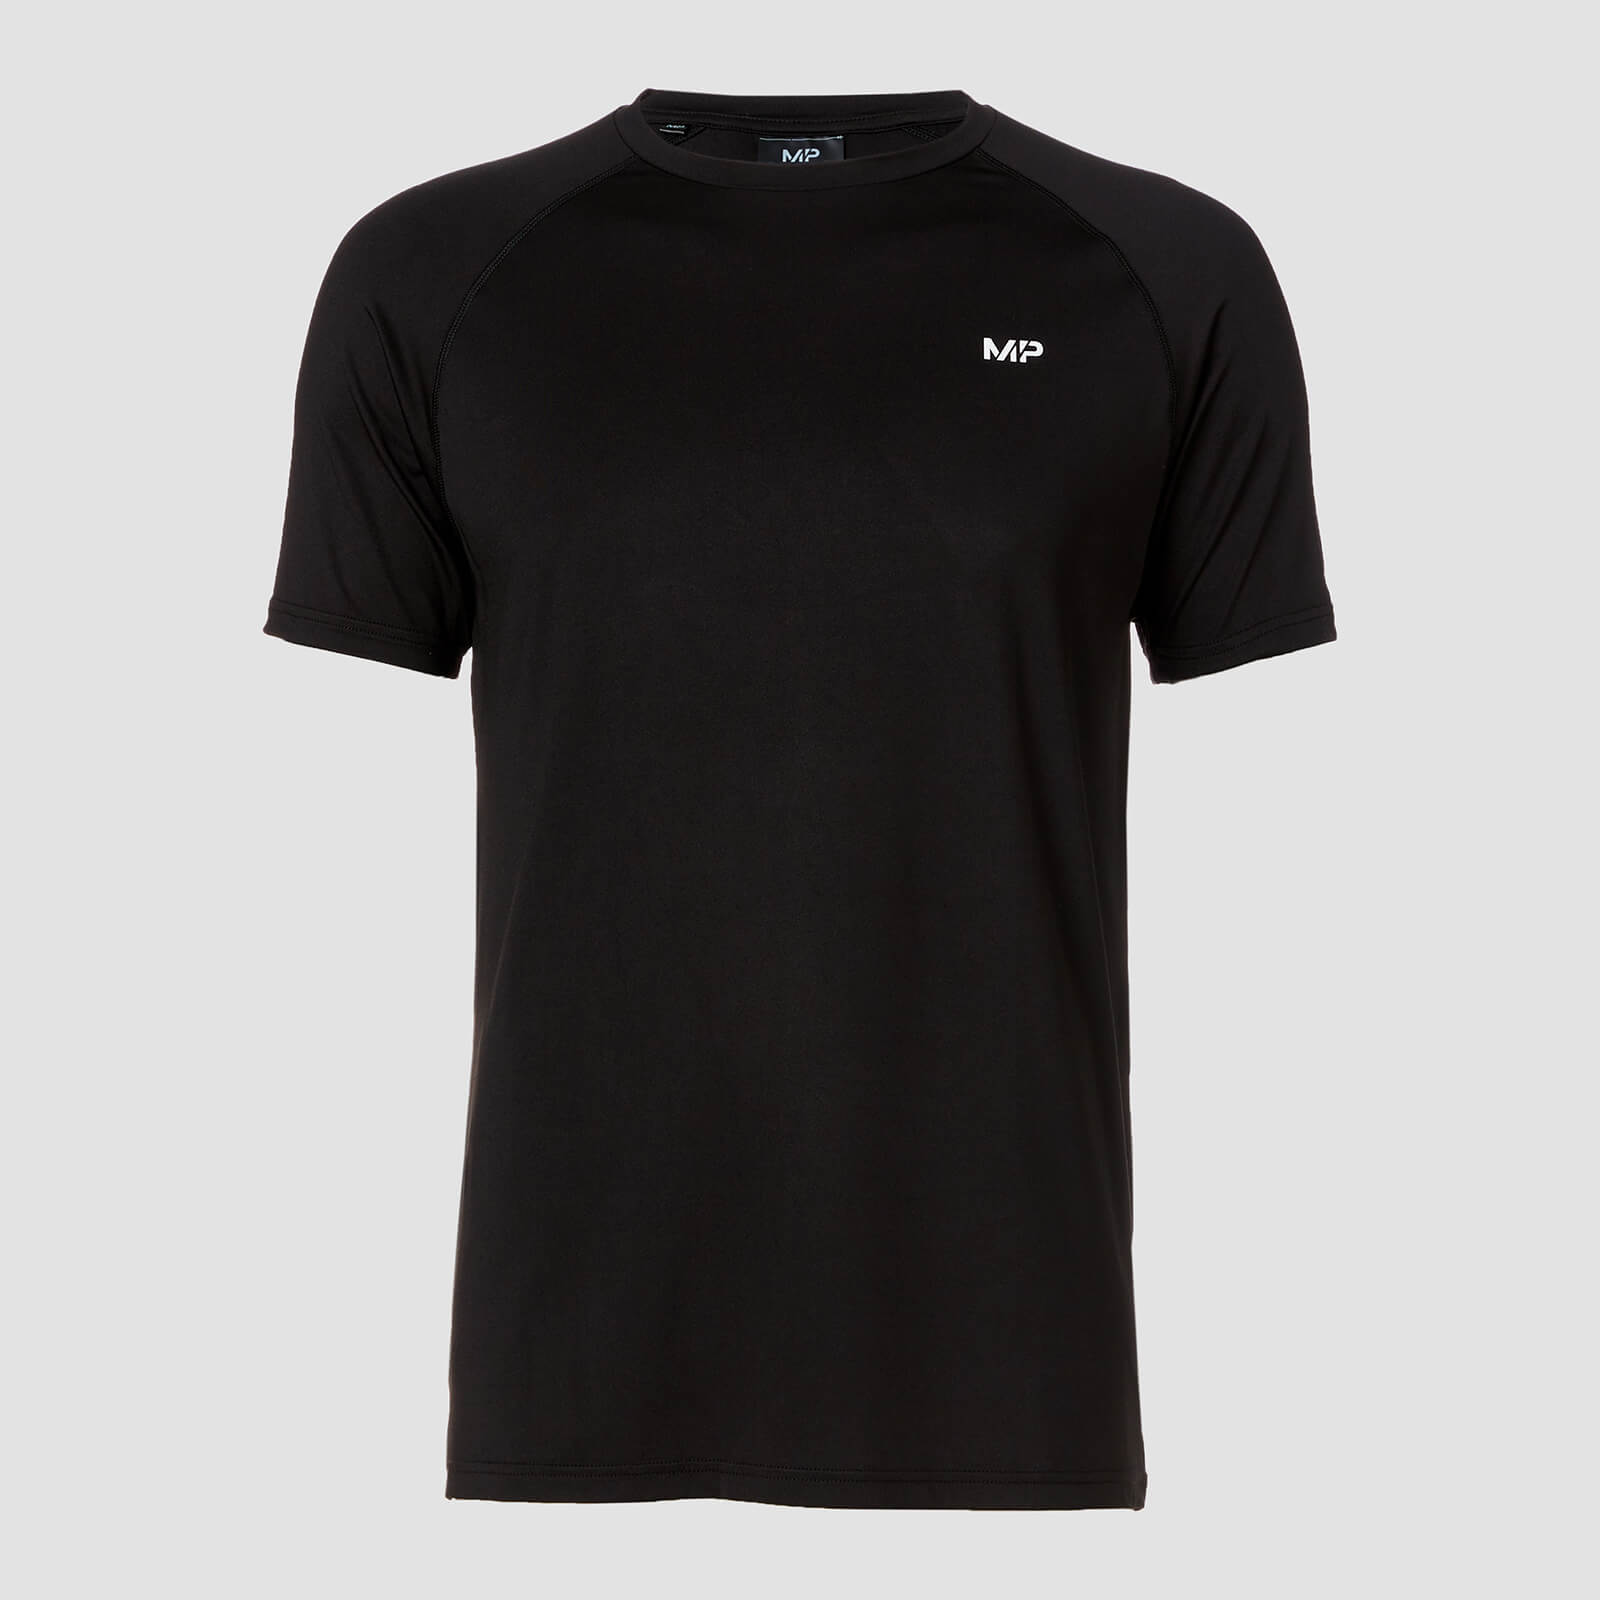 Myprotein Camiseta Essentials Training para hombre de MP - Negro - XL